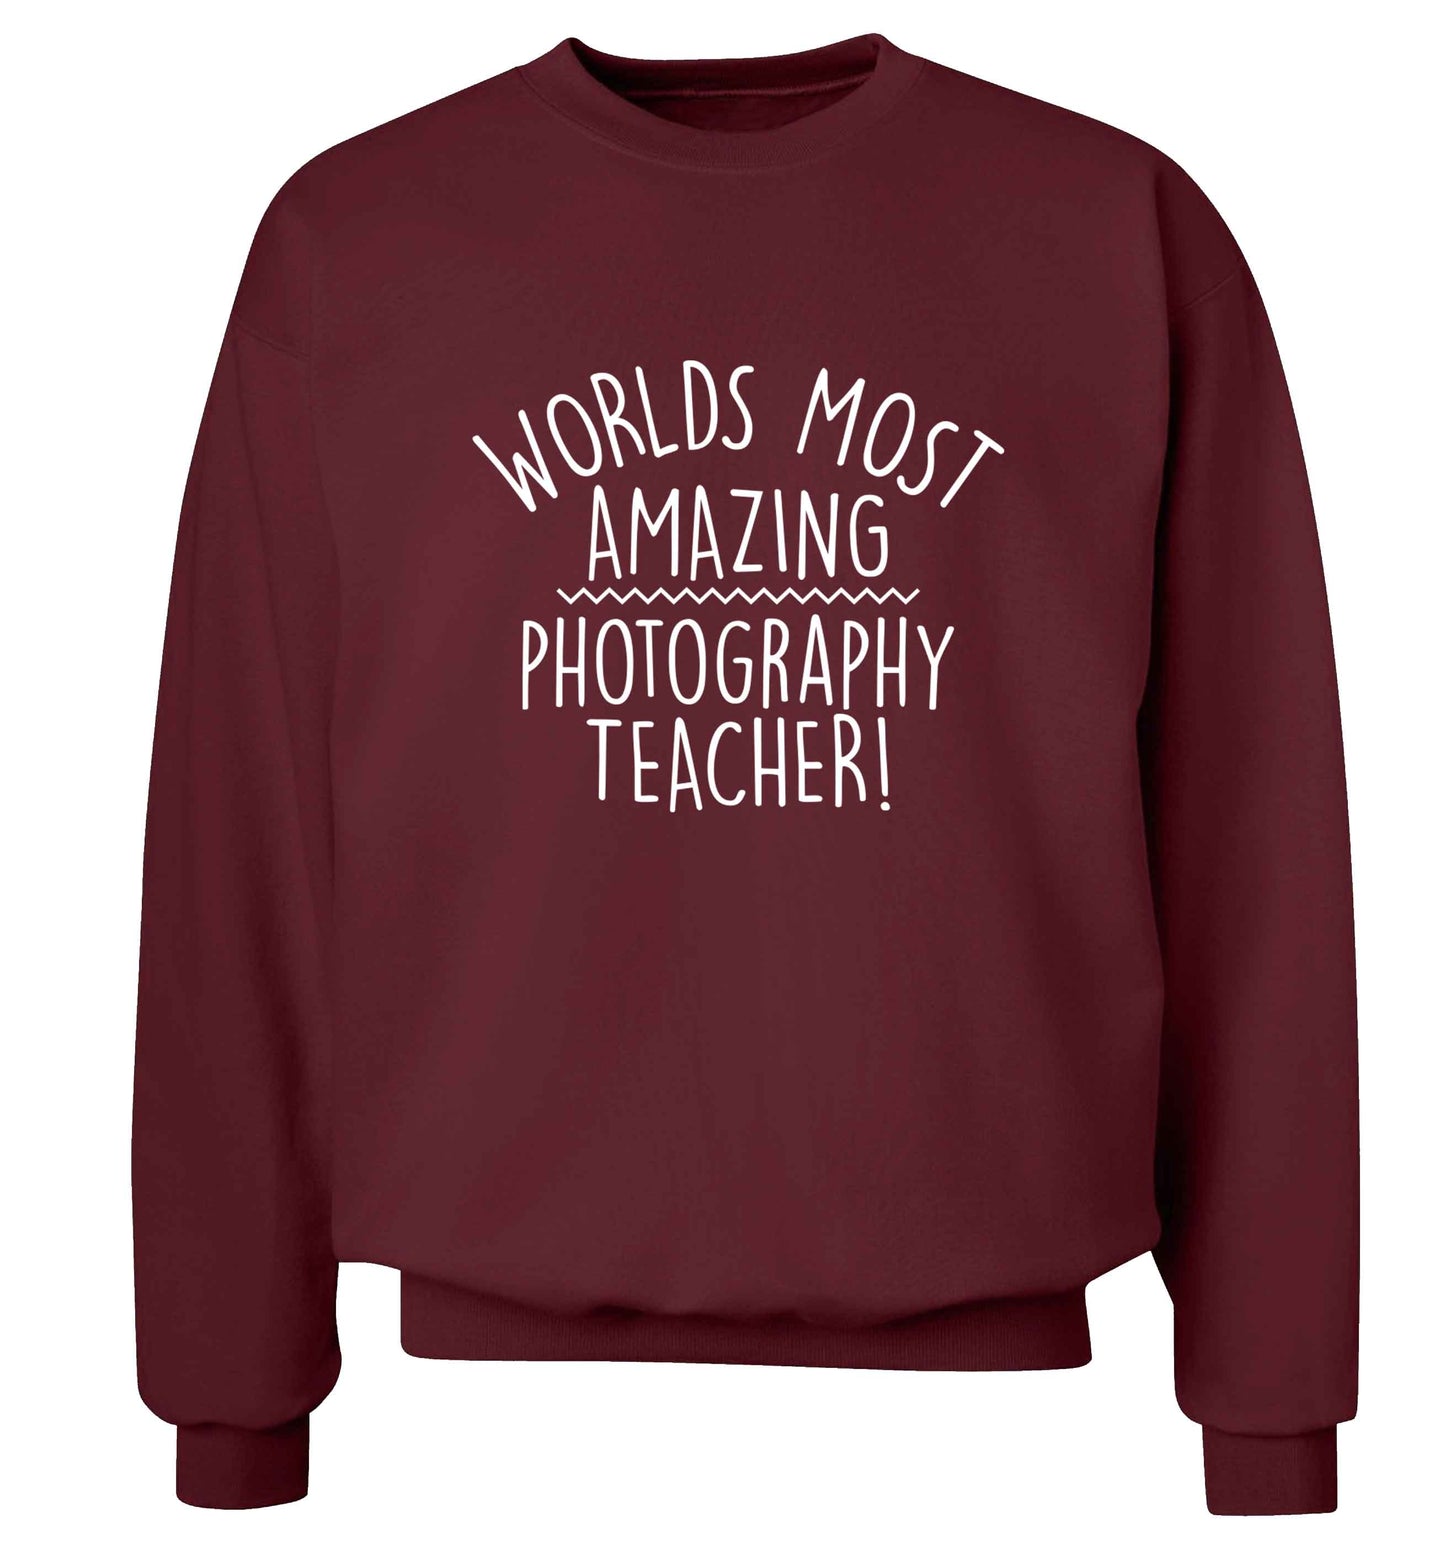 Worlds most amazing photography teacher adult's unisex maroon sweater 2XL